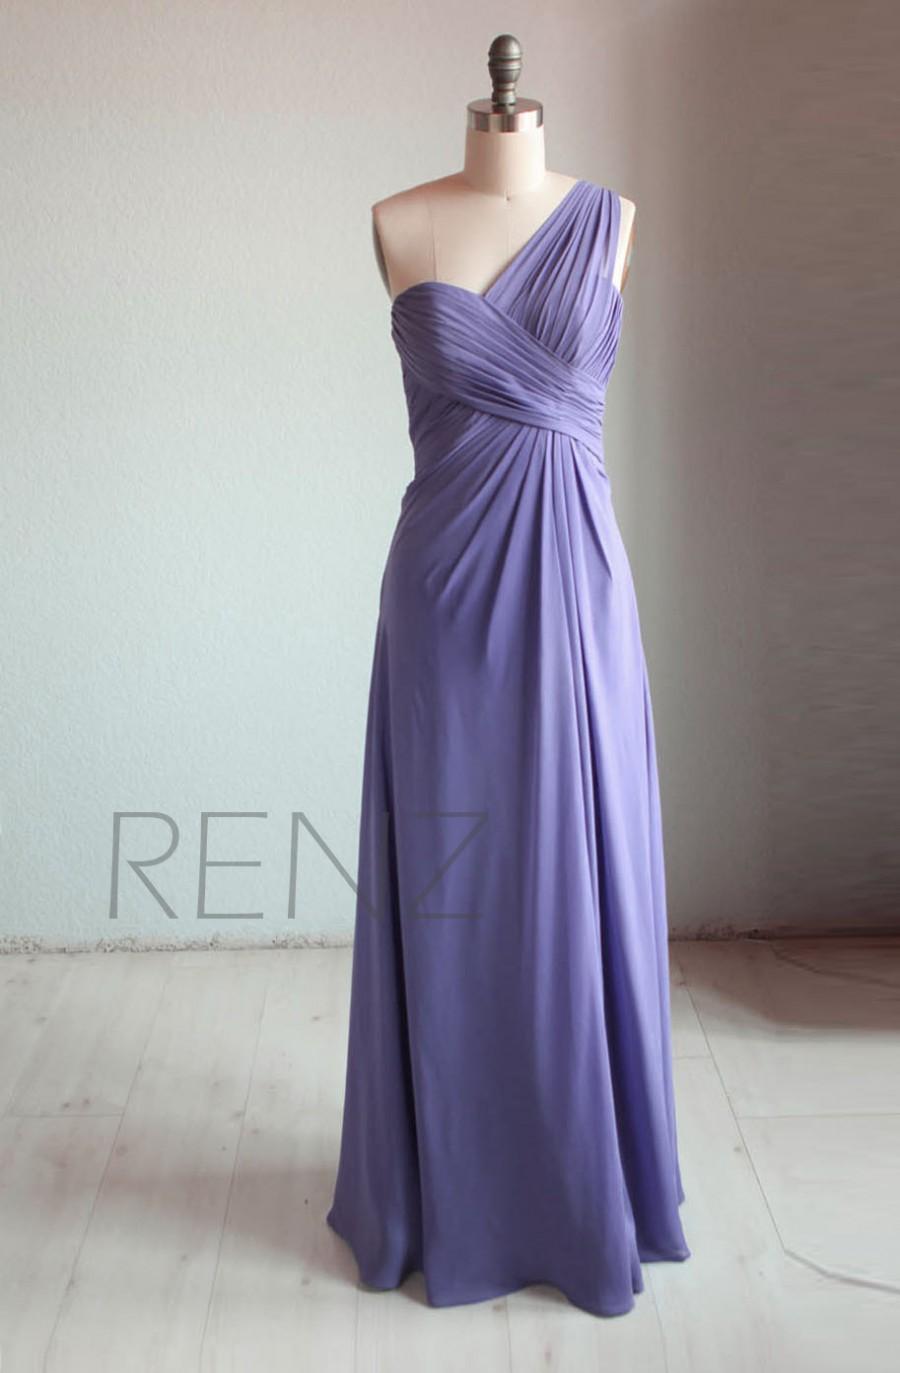 Mariage - 2015 Light Purple Bridesmaid dress, Backless Pleated Party dress, Long Chiffon Formal dress, One shoulder Prom dress floor length (B052)